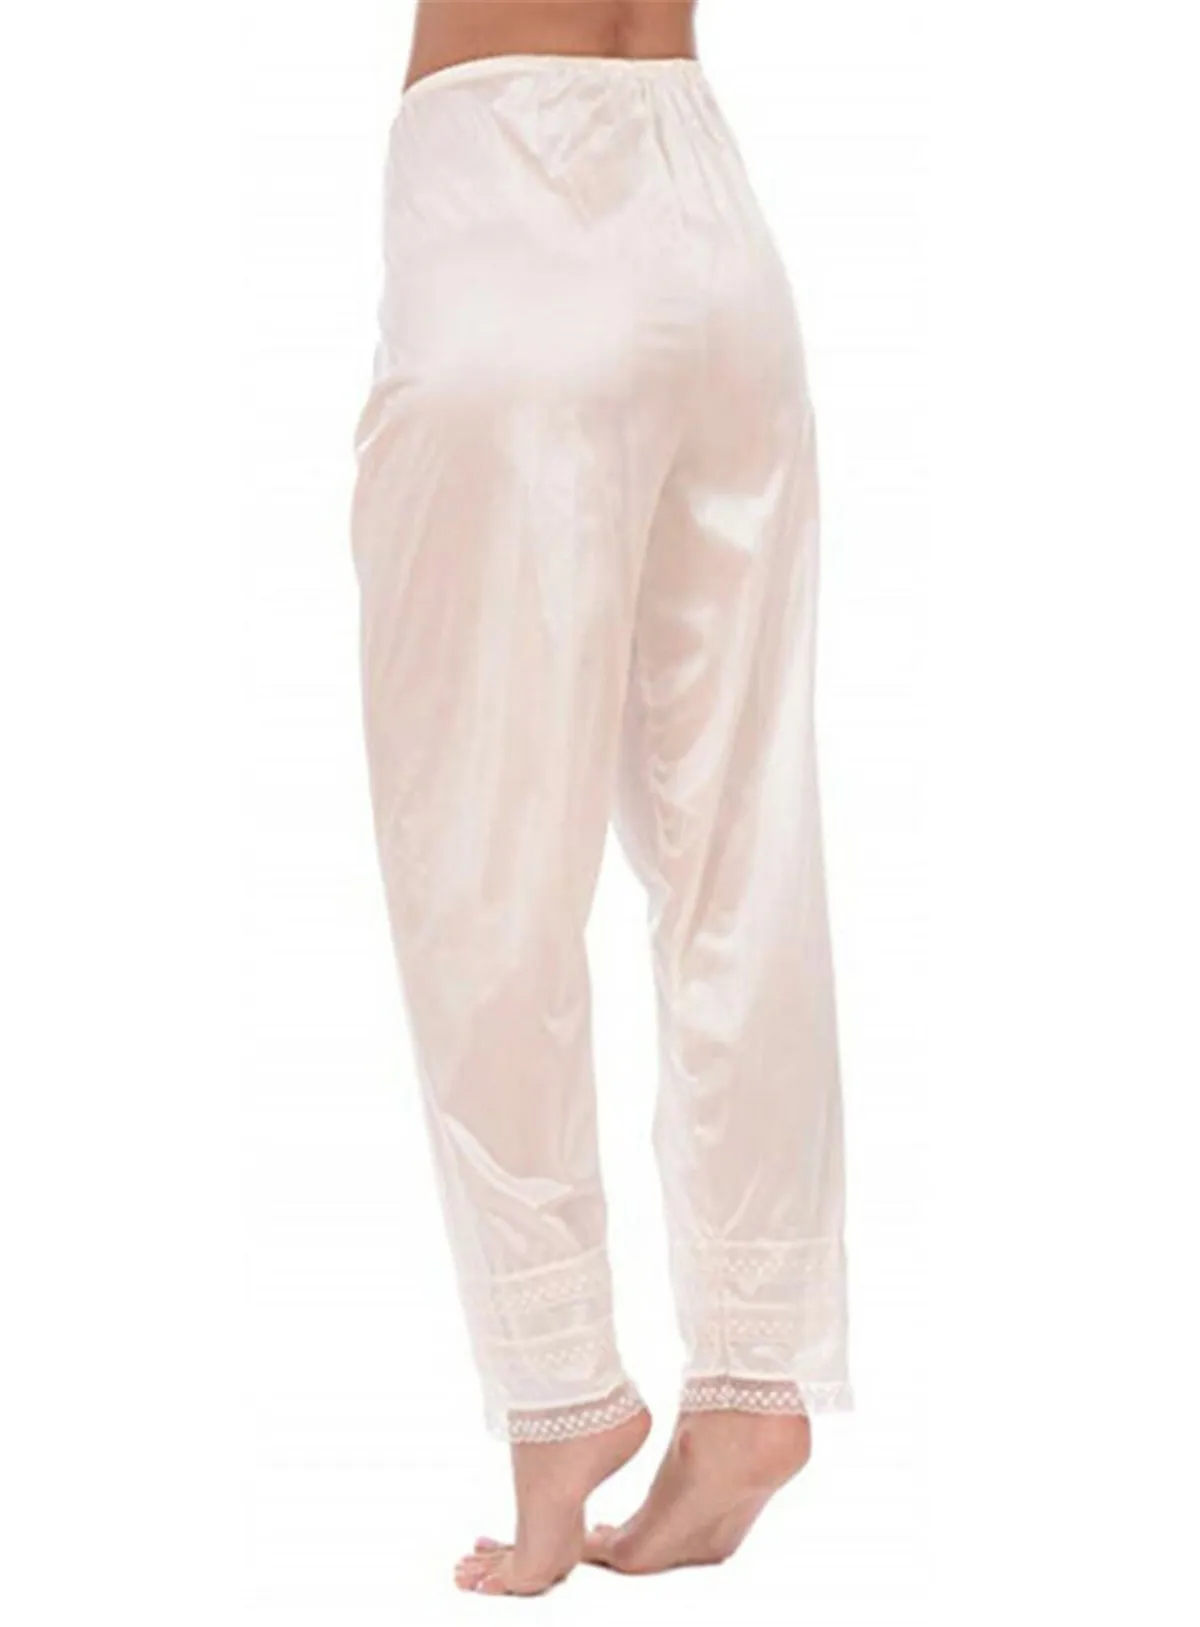 Women Slip Liner Ladies Sleep Bottoms Newest Fashion Solid Girl Nightwear Pyjamas Bottoms Lounge Pants Trousers